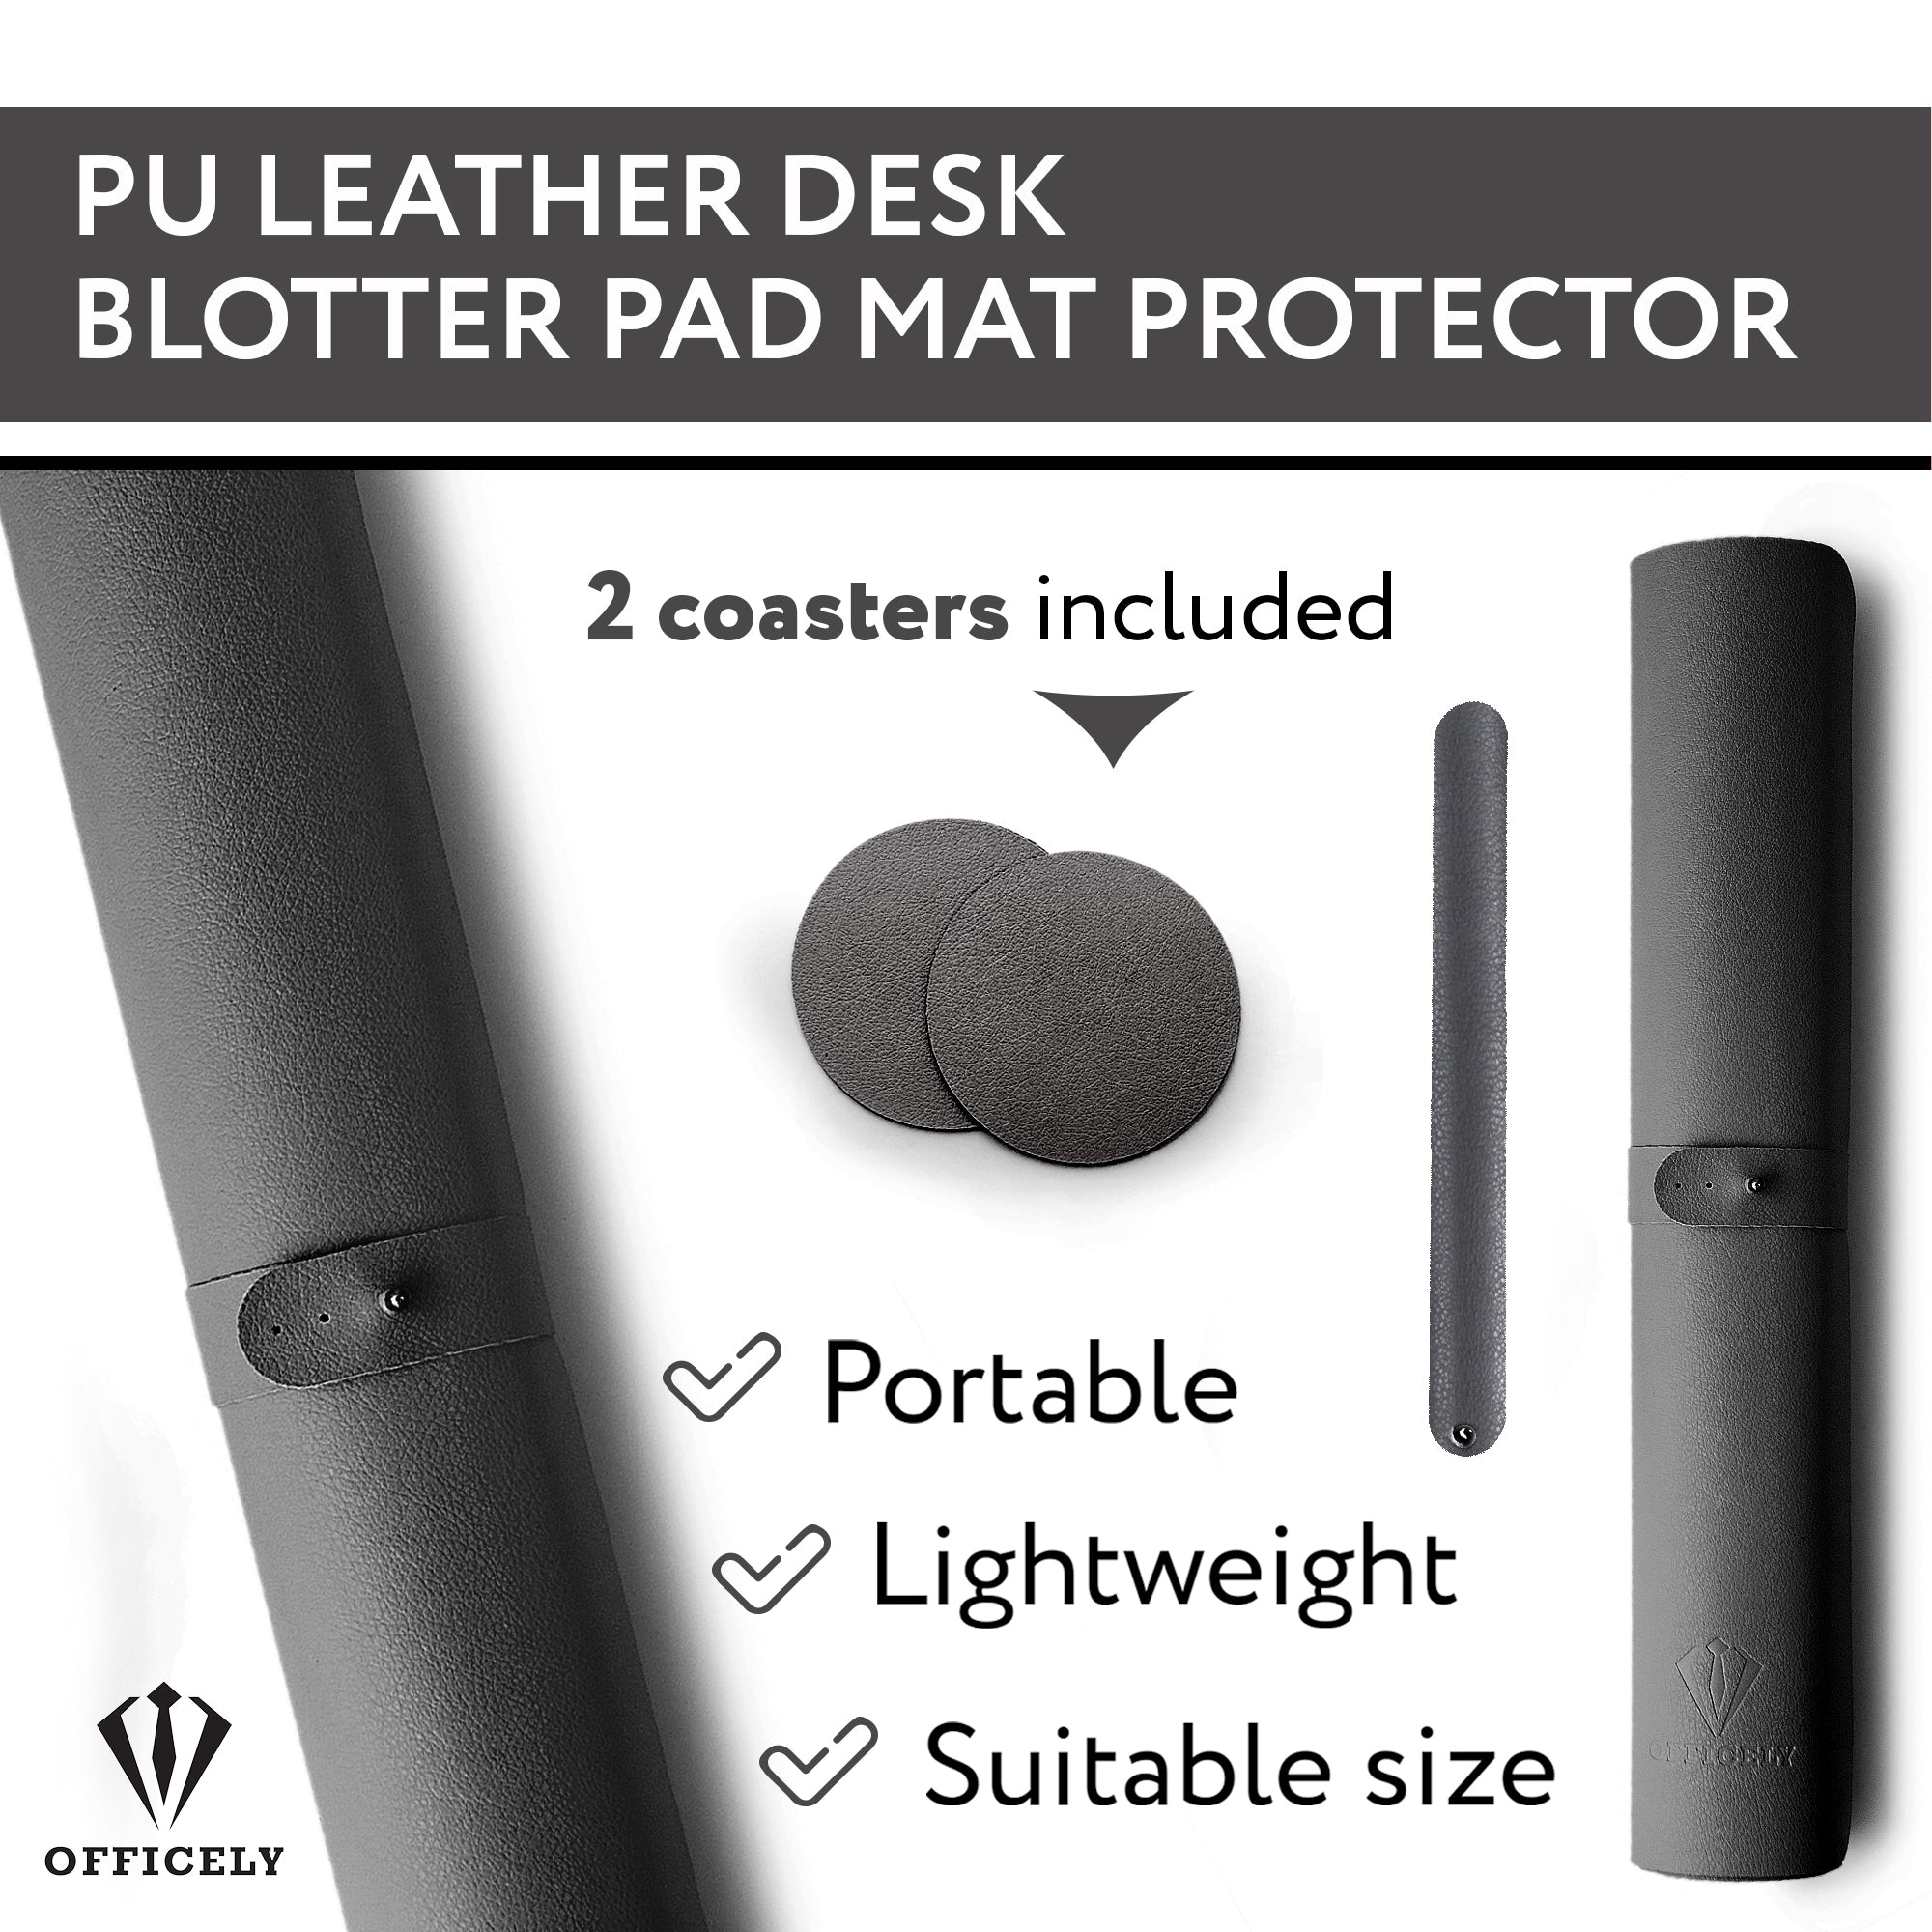 24 X 60 Inch XL Desk Pad Protector Clear Desk Mats Blotter on Top of Desks  for L